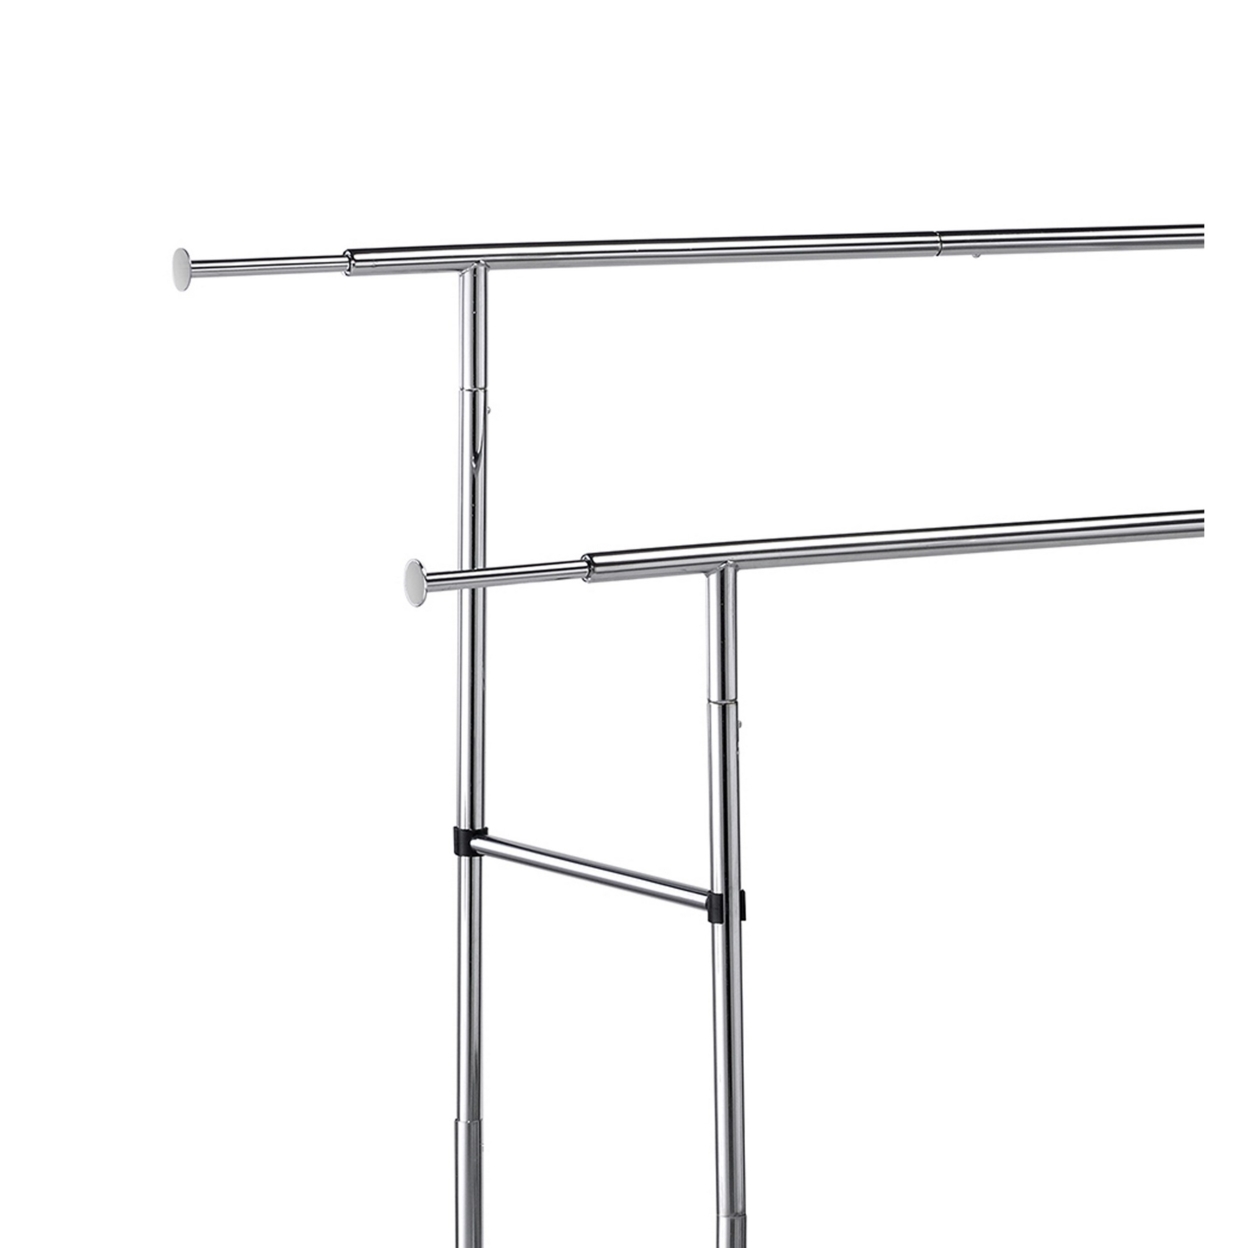 Dual Bar Tubular Metal Frame Garment Rack With Casters, Chrome- Saltoro Sherpi